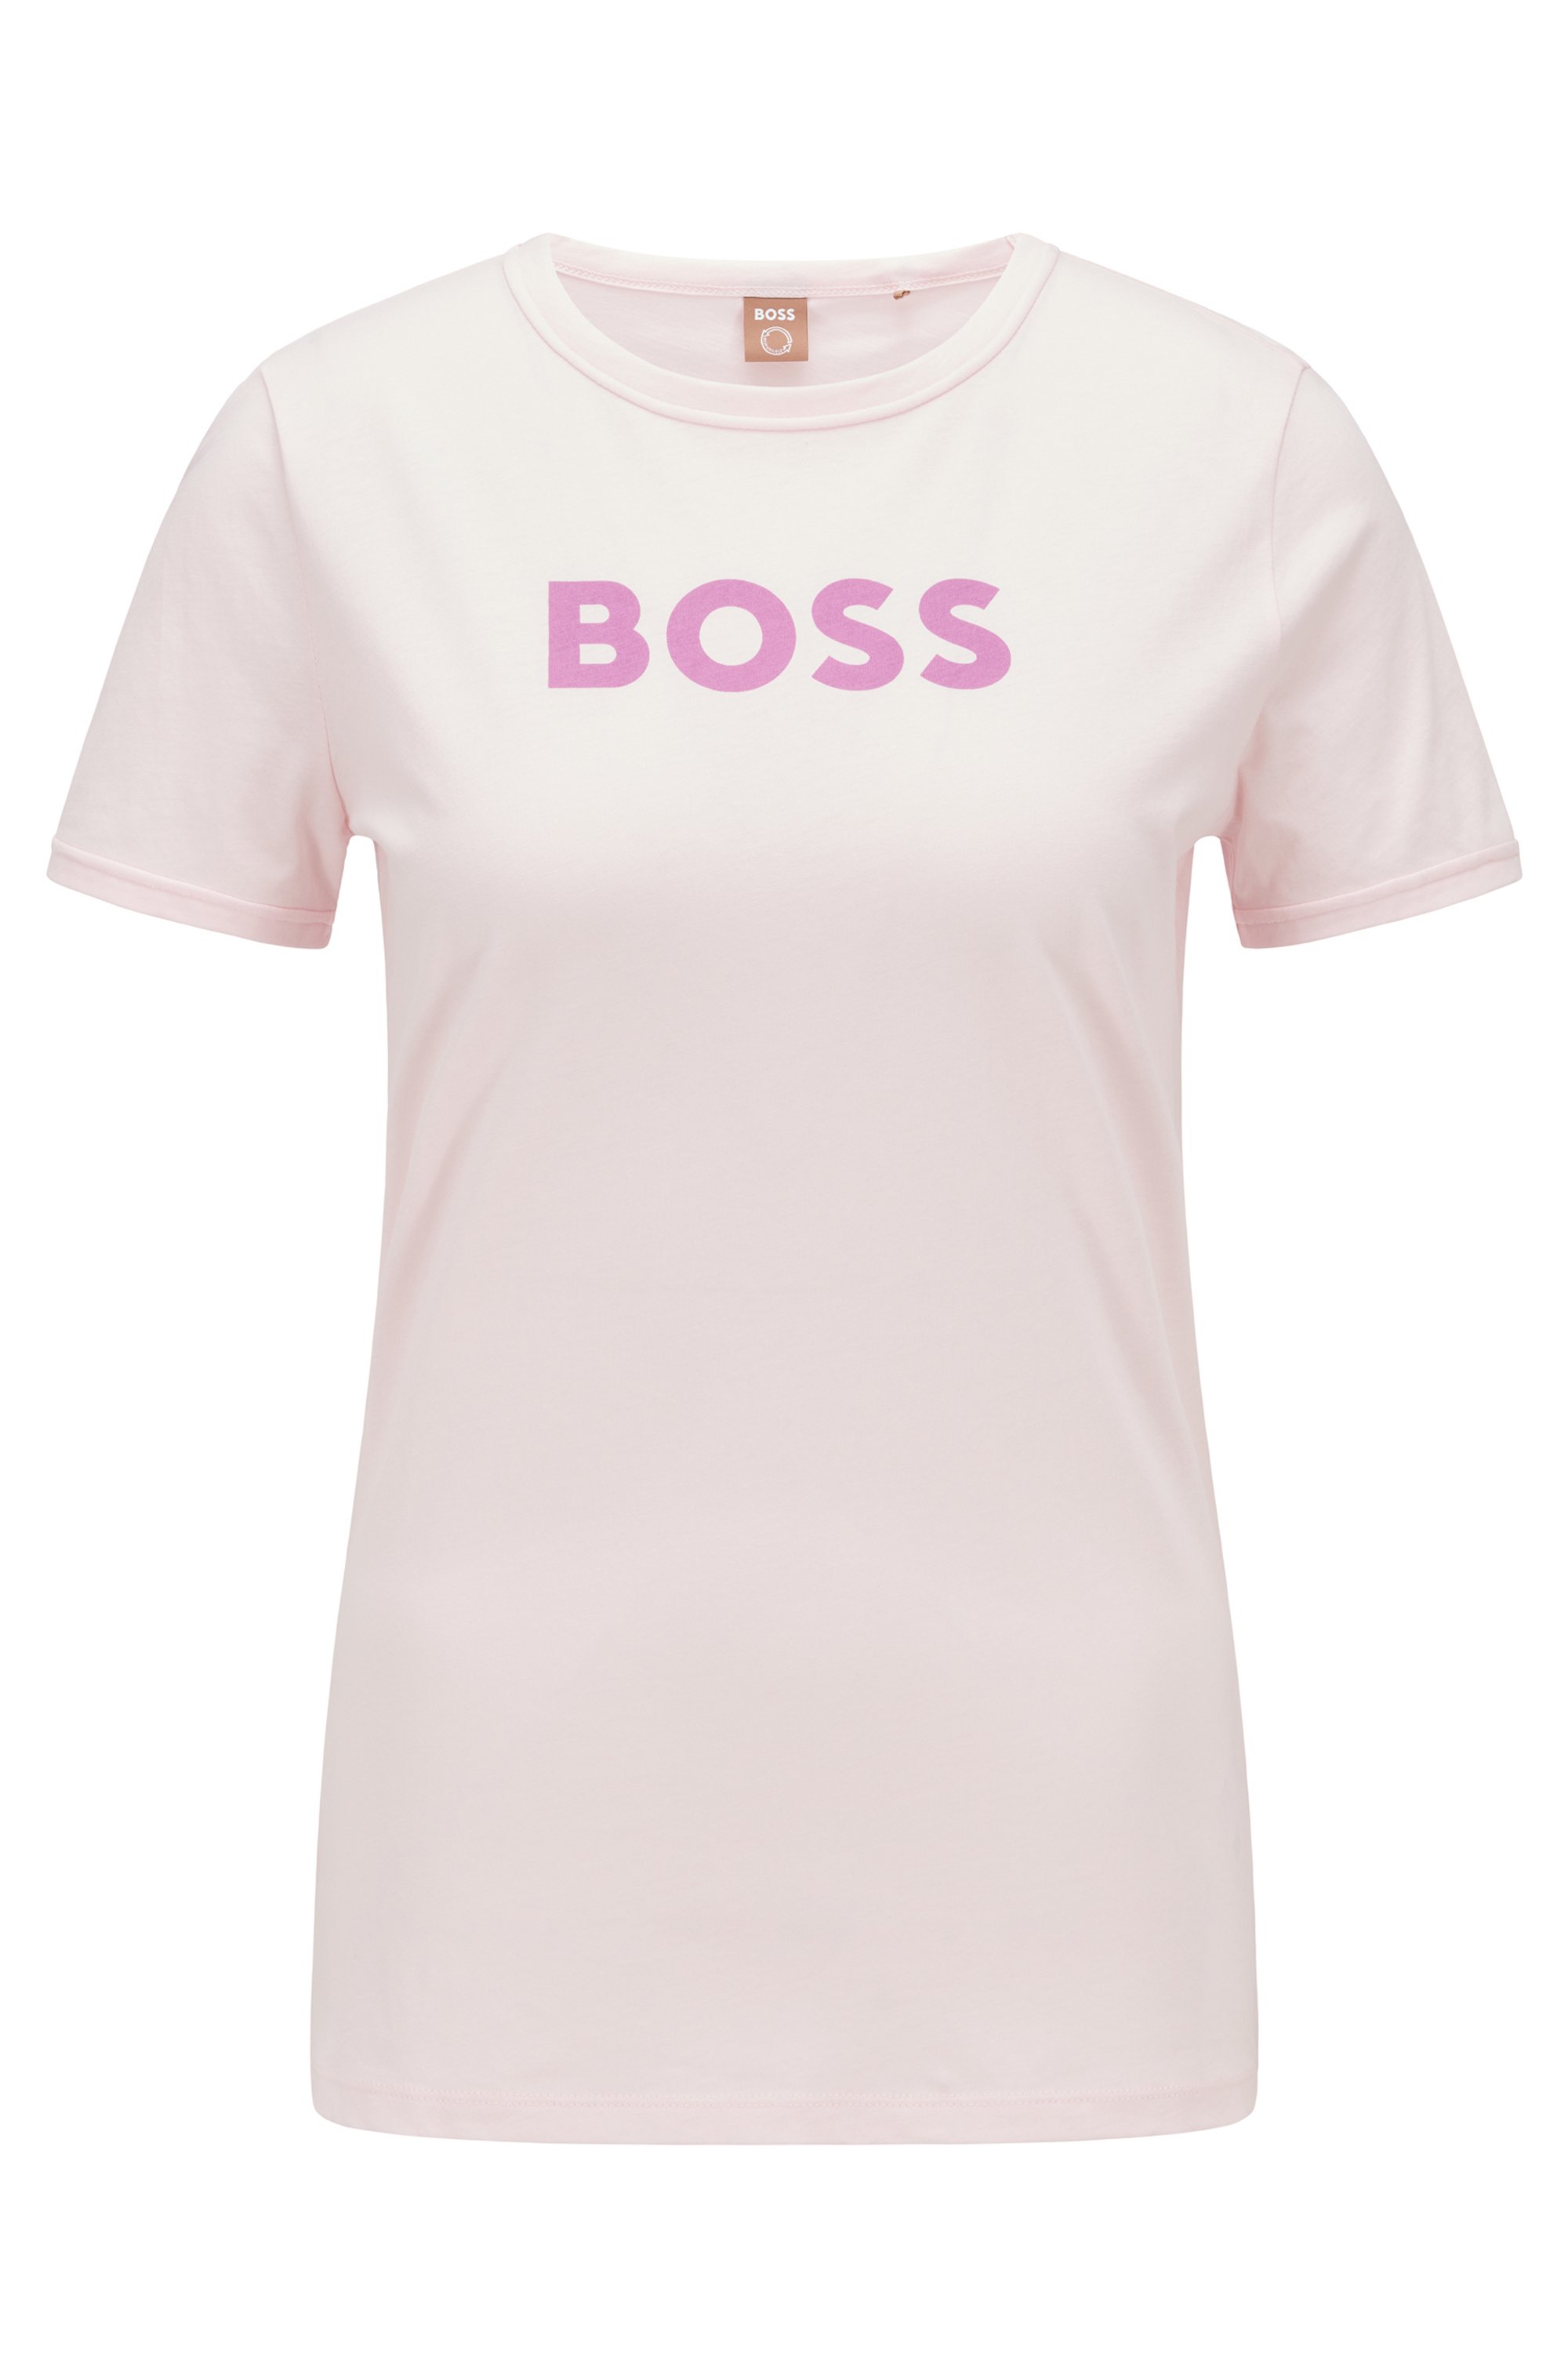 Organic-cotton T-shirt with contrast logo, light pink